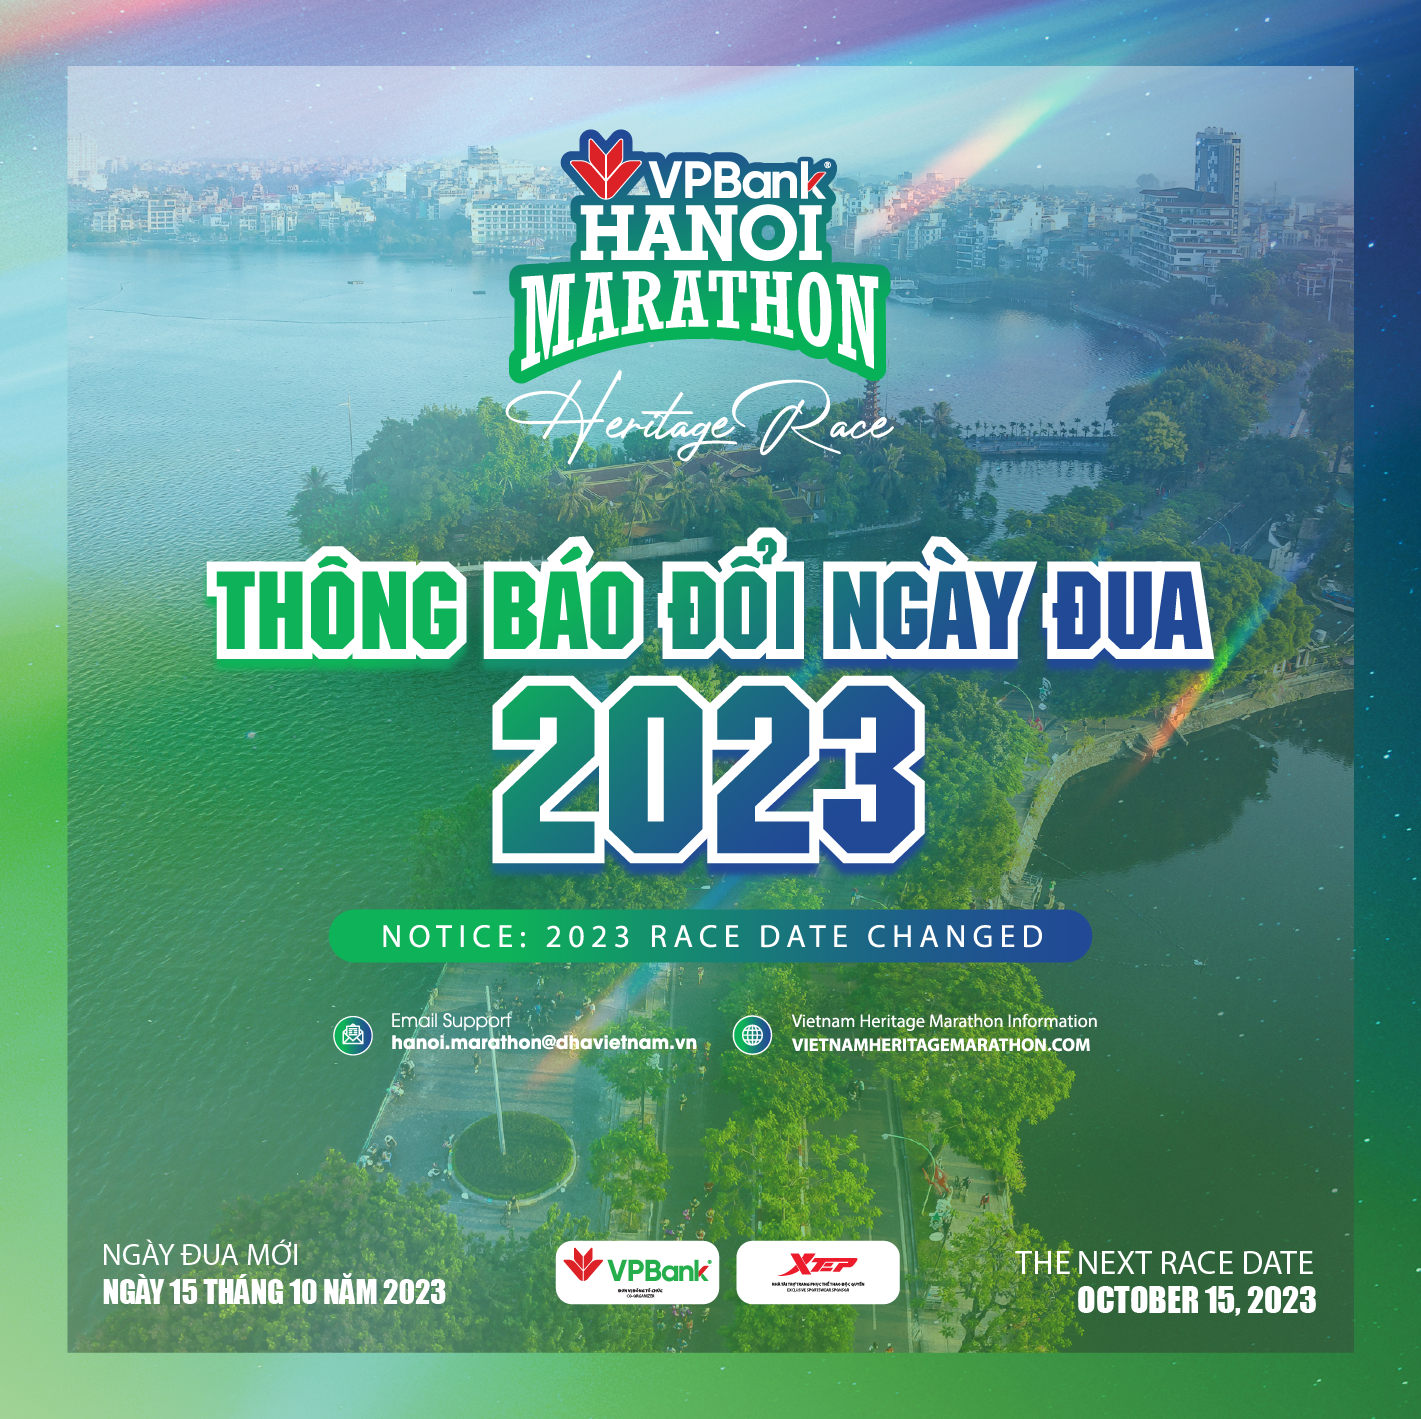 VPBank Hanoi Marathon Changes Race Date To October 15, 2023